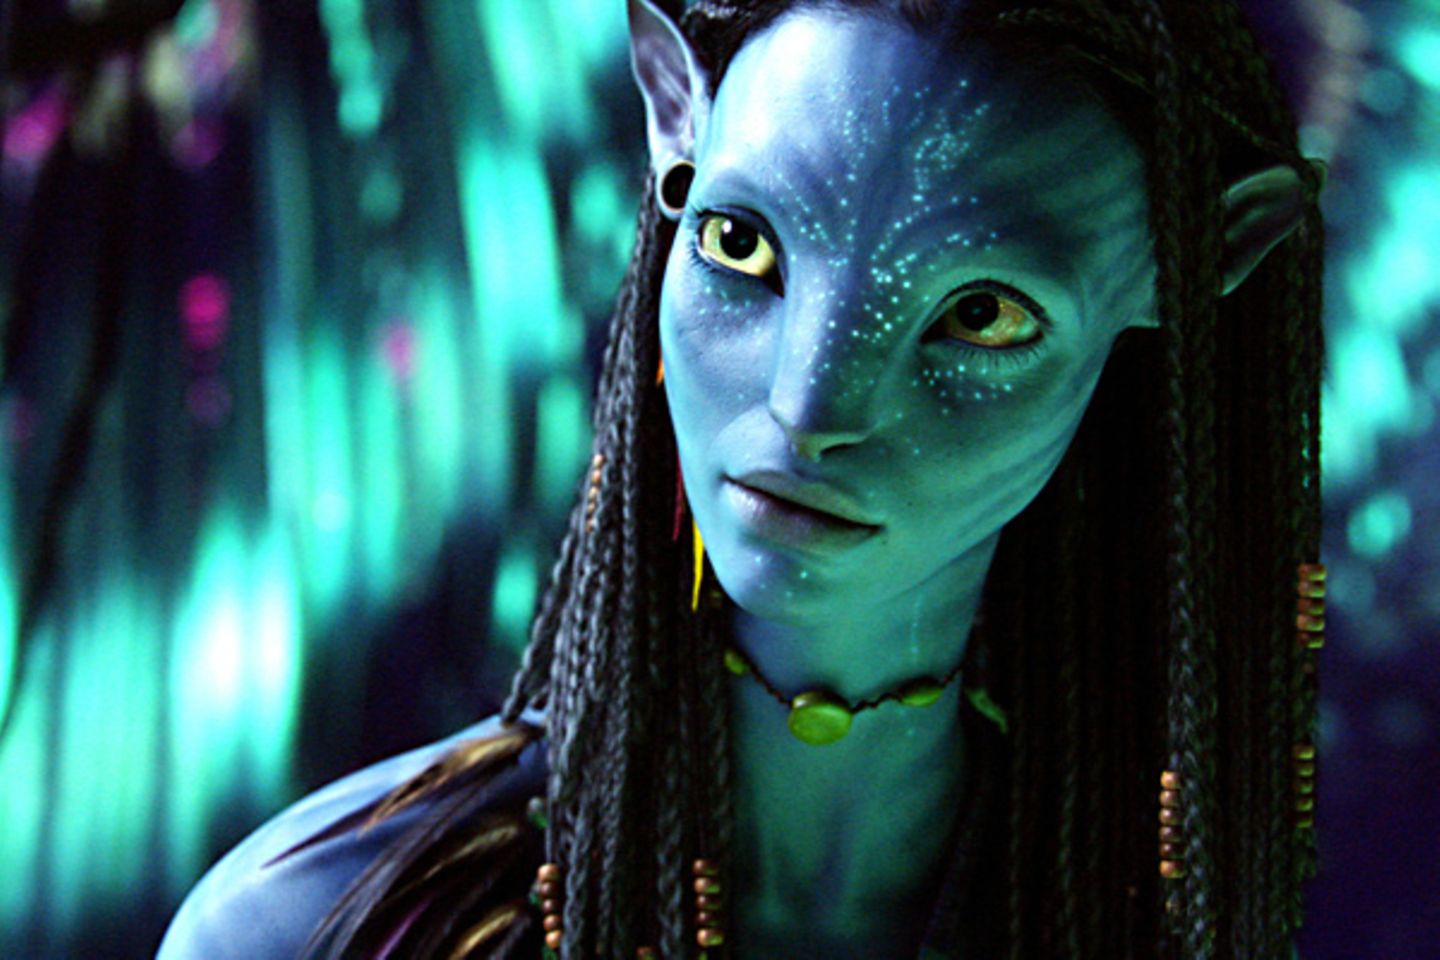 Zoe Saldana in "Avatar":